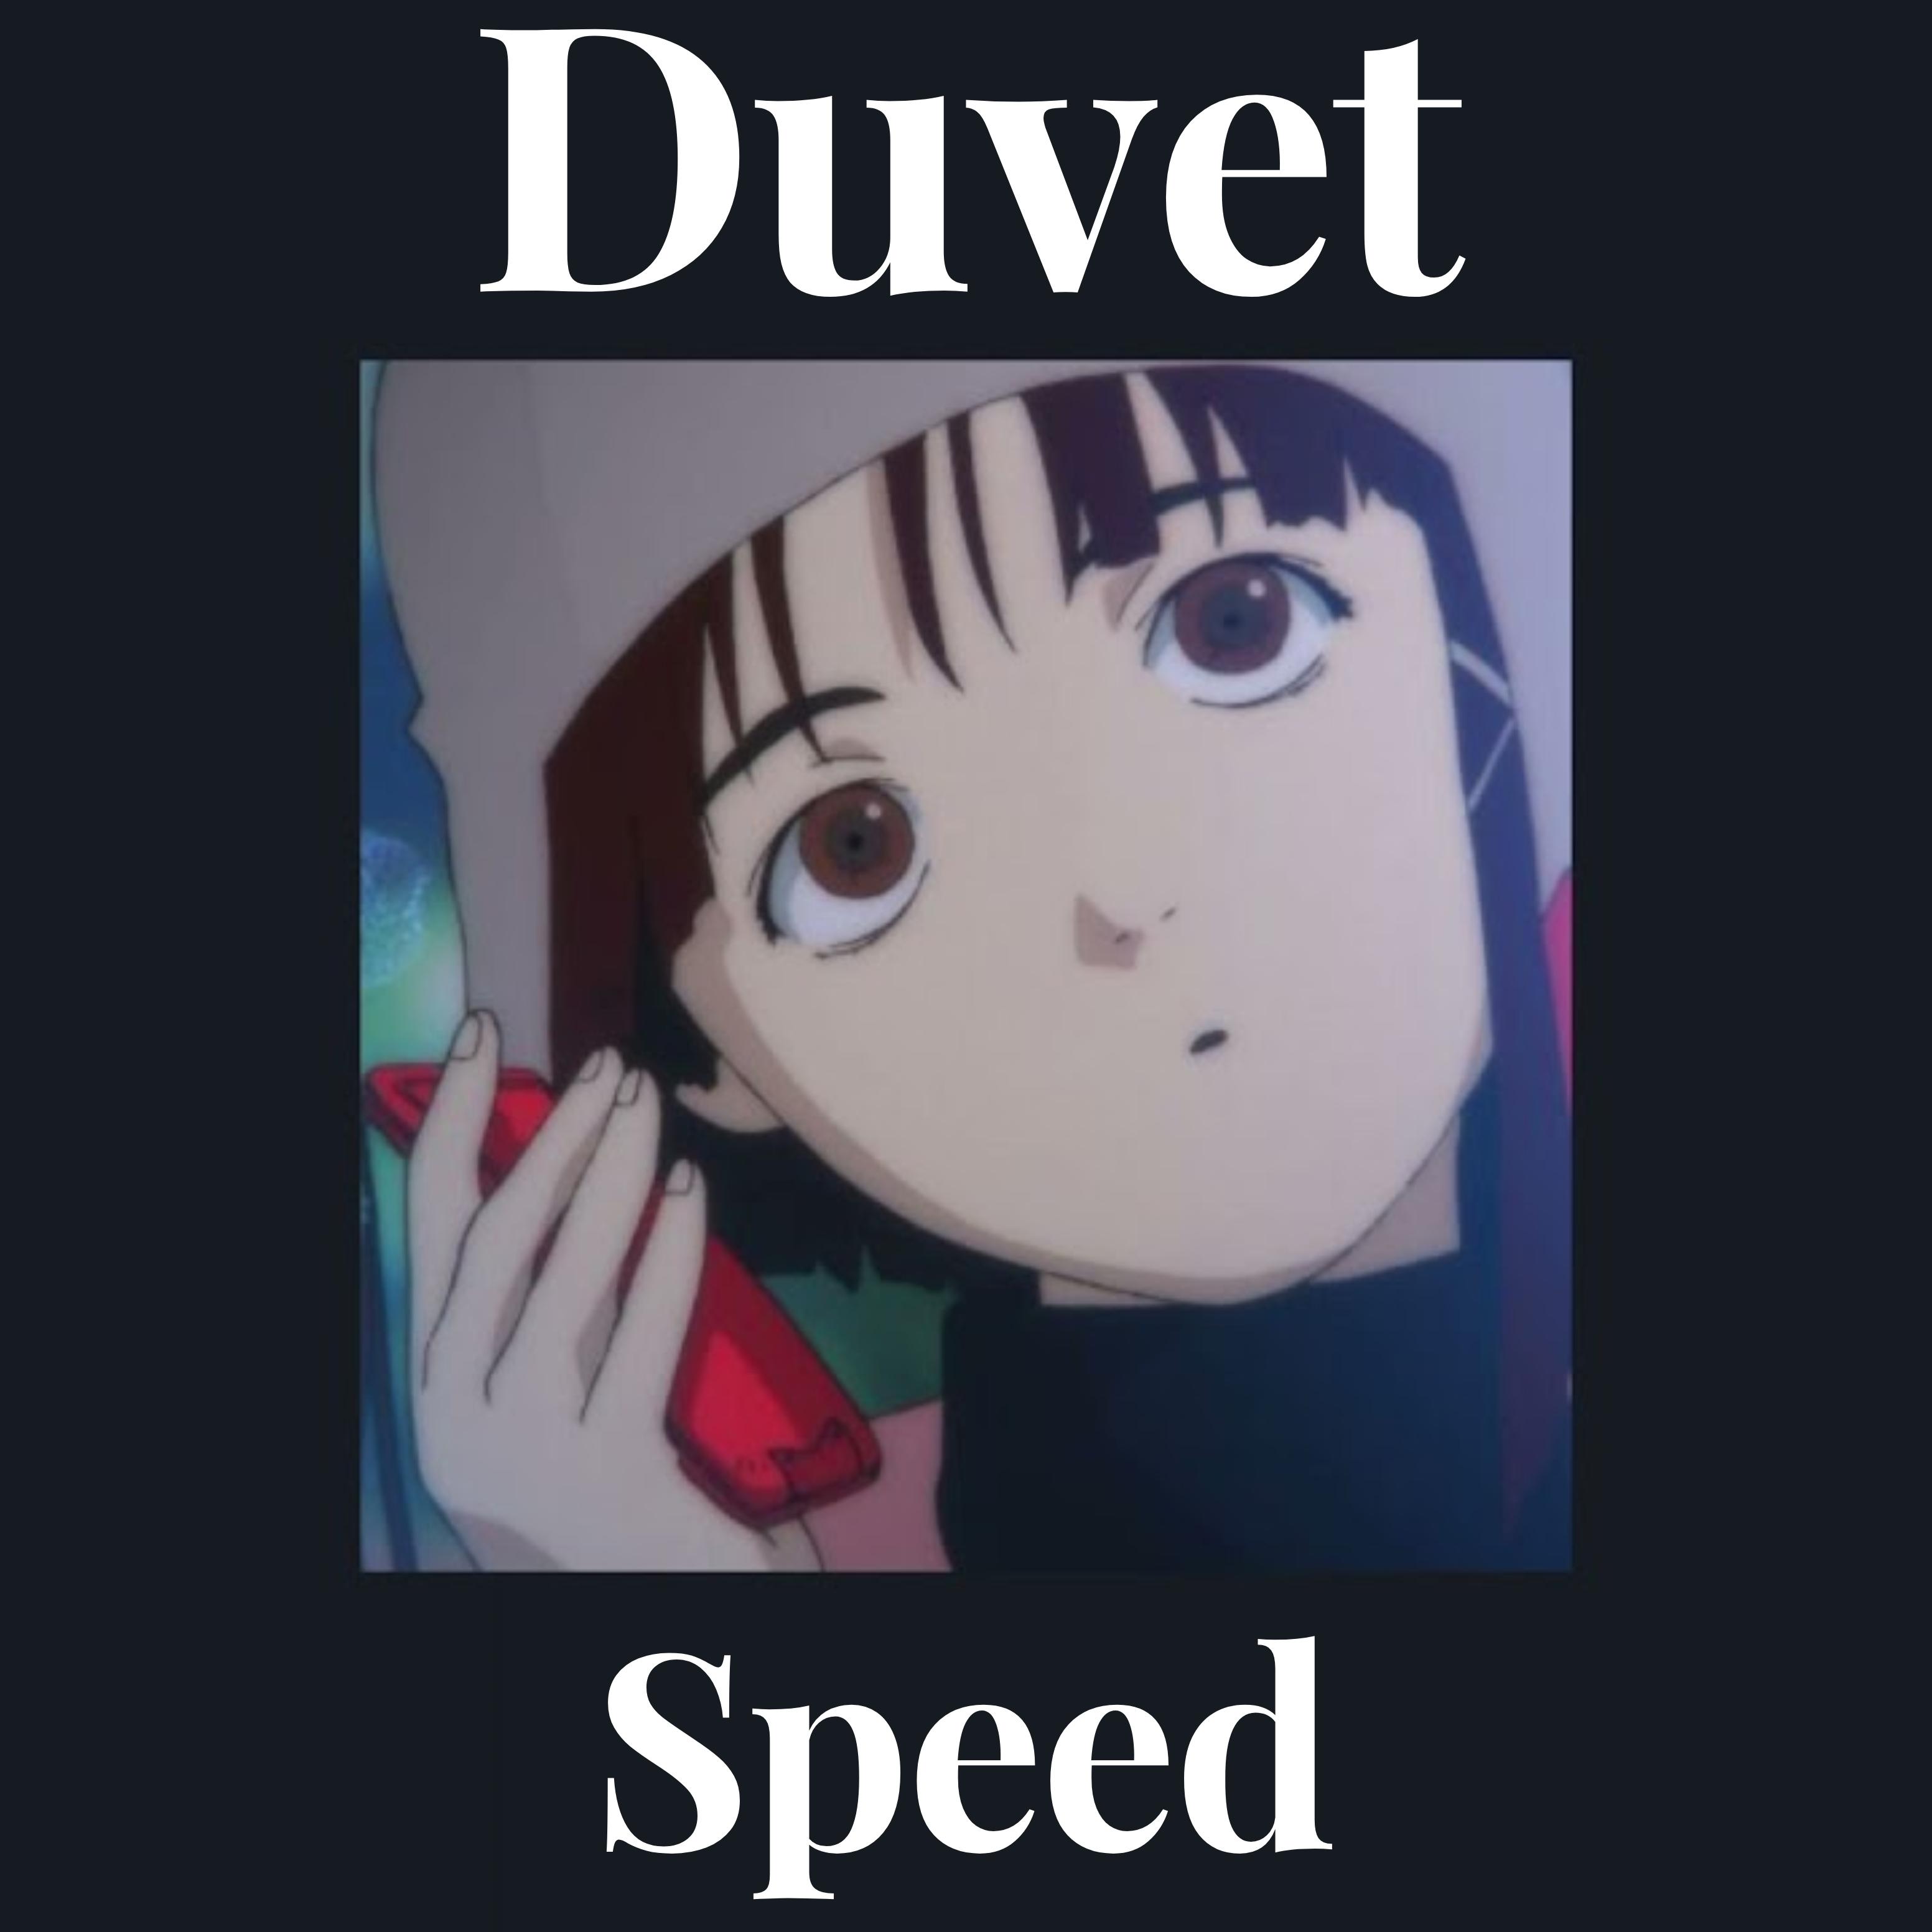 VOA - Duvet speed